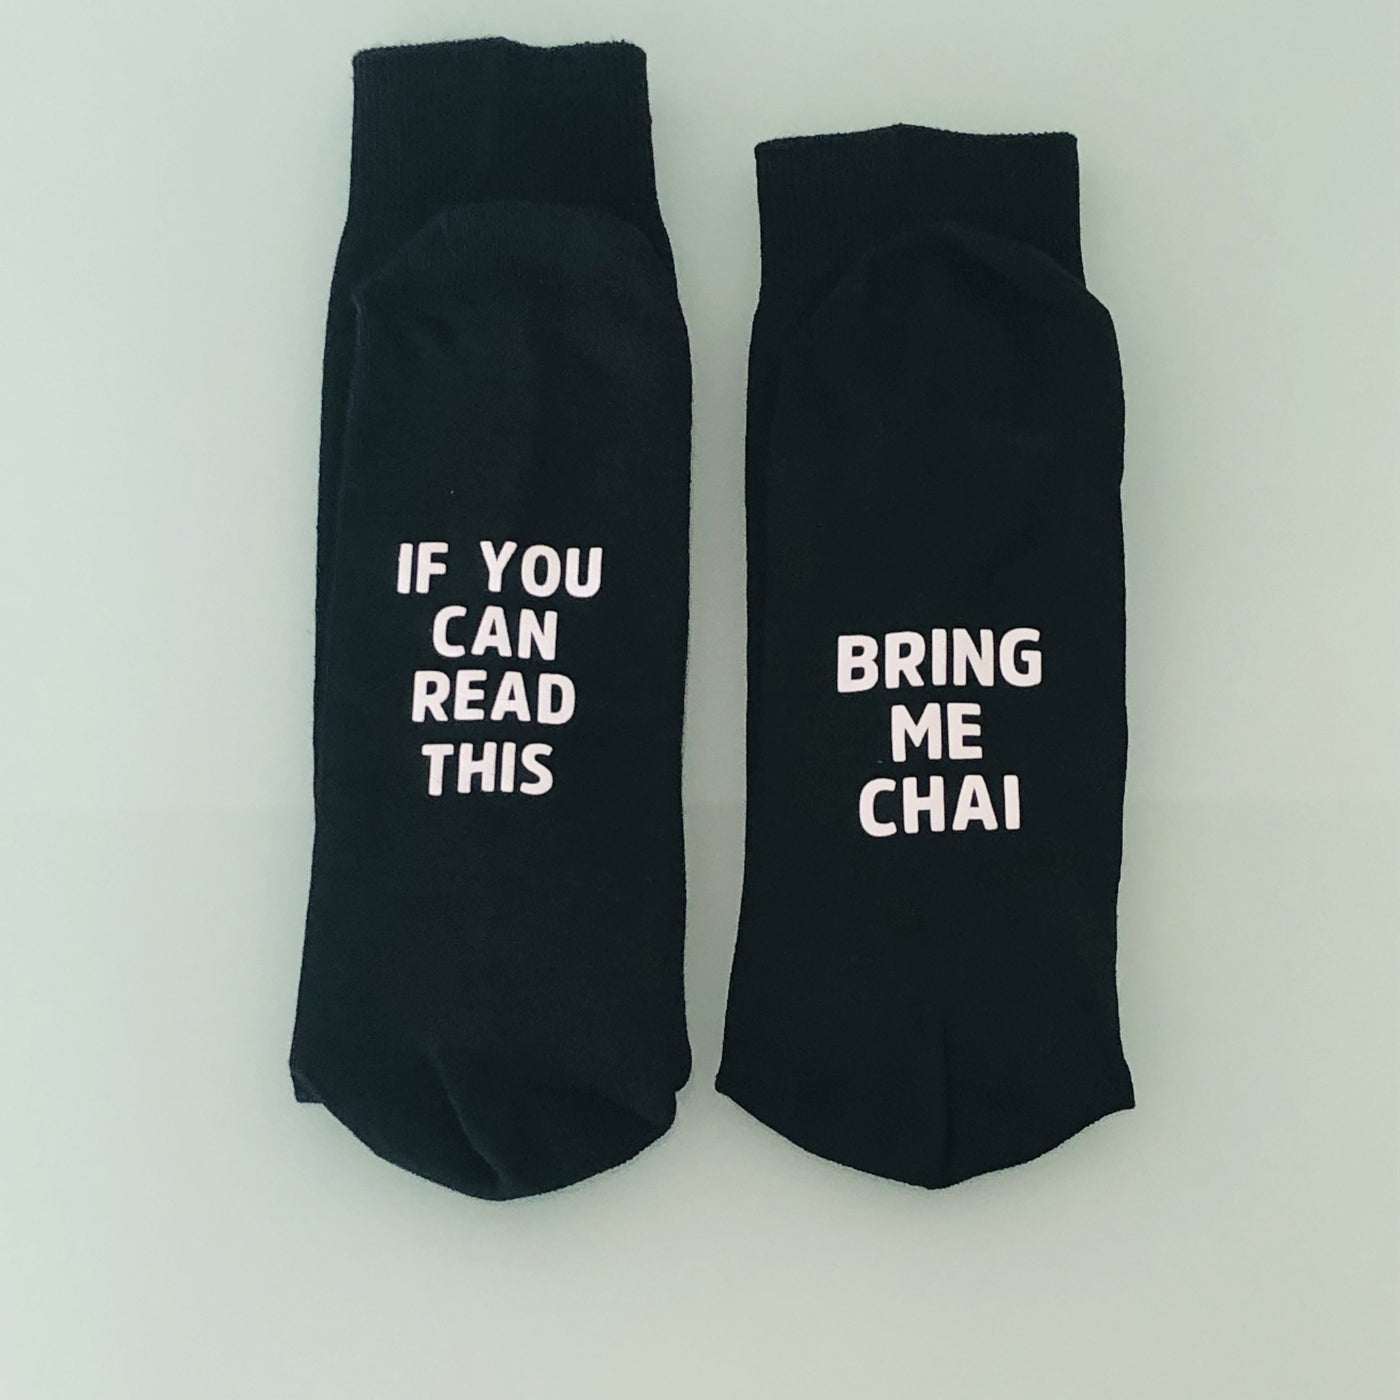 Bring Me Chai Crew Socks